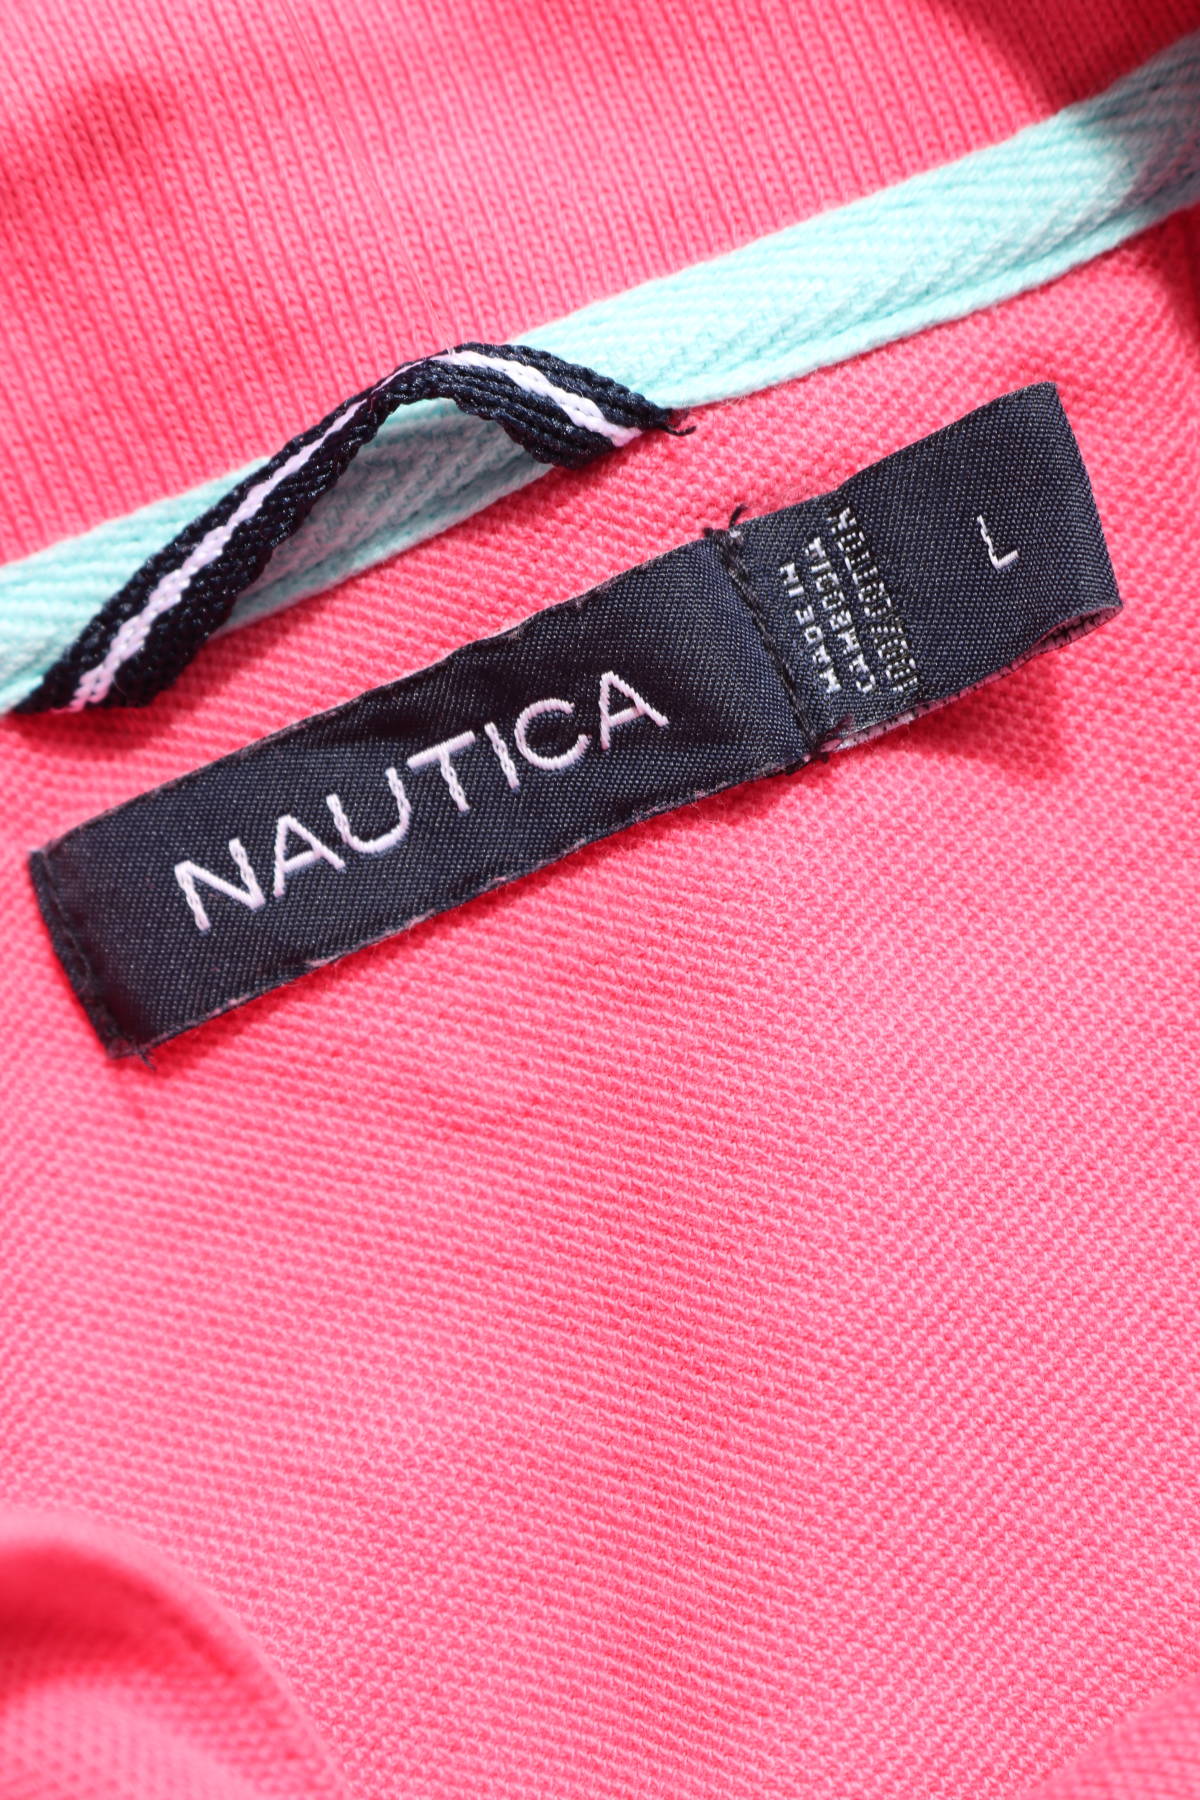 Тениска NAUTICA3